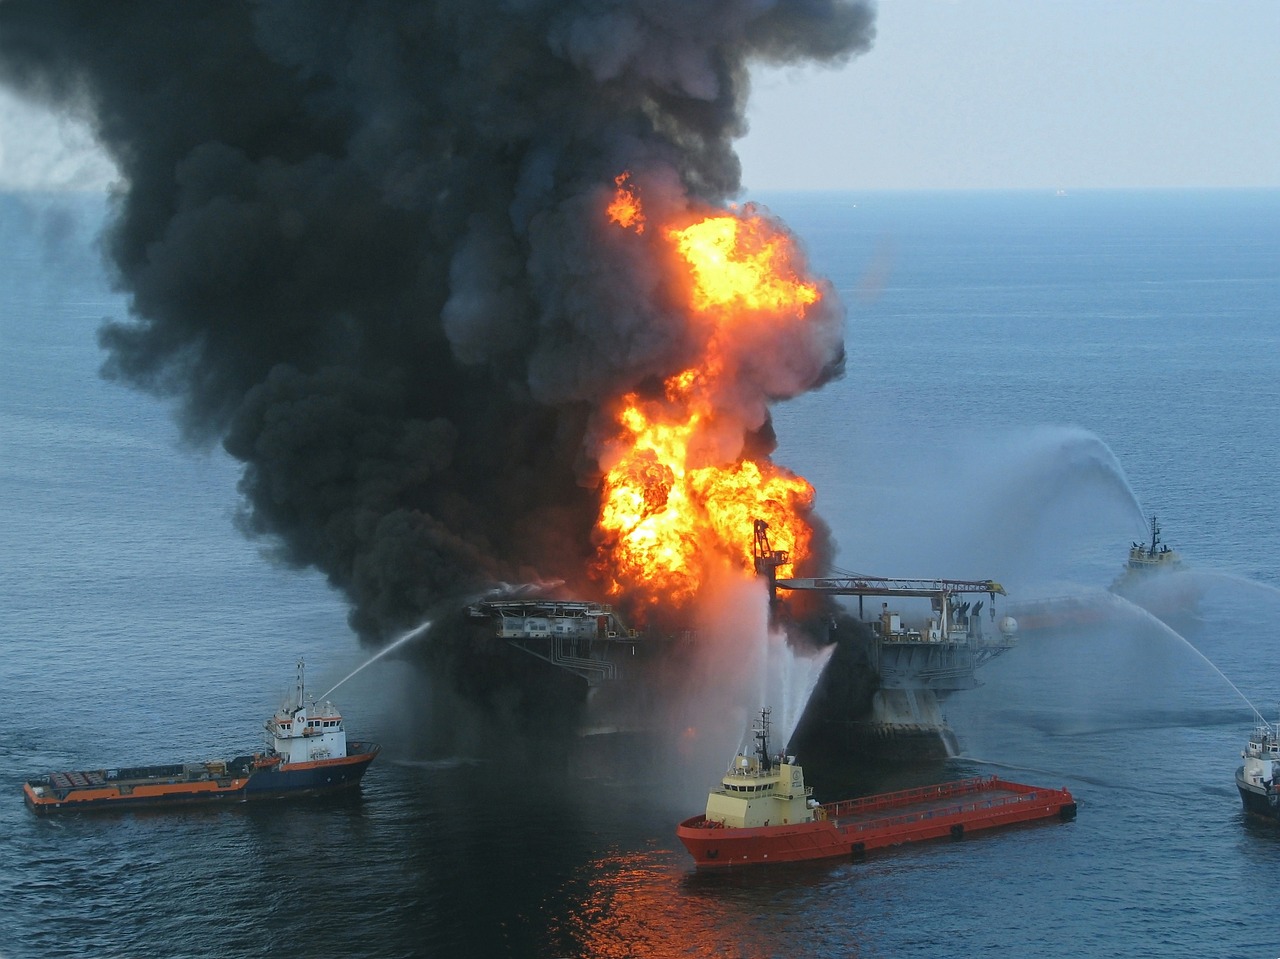 oil-rig-explosion-618704_1280